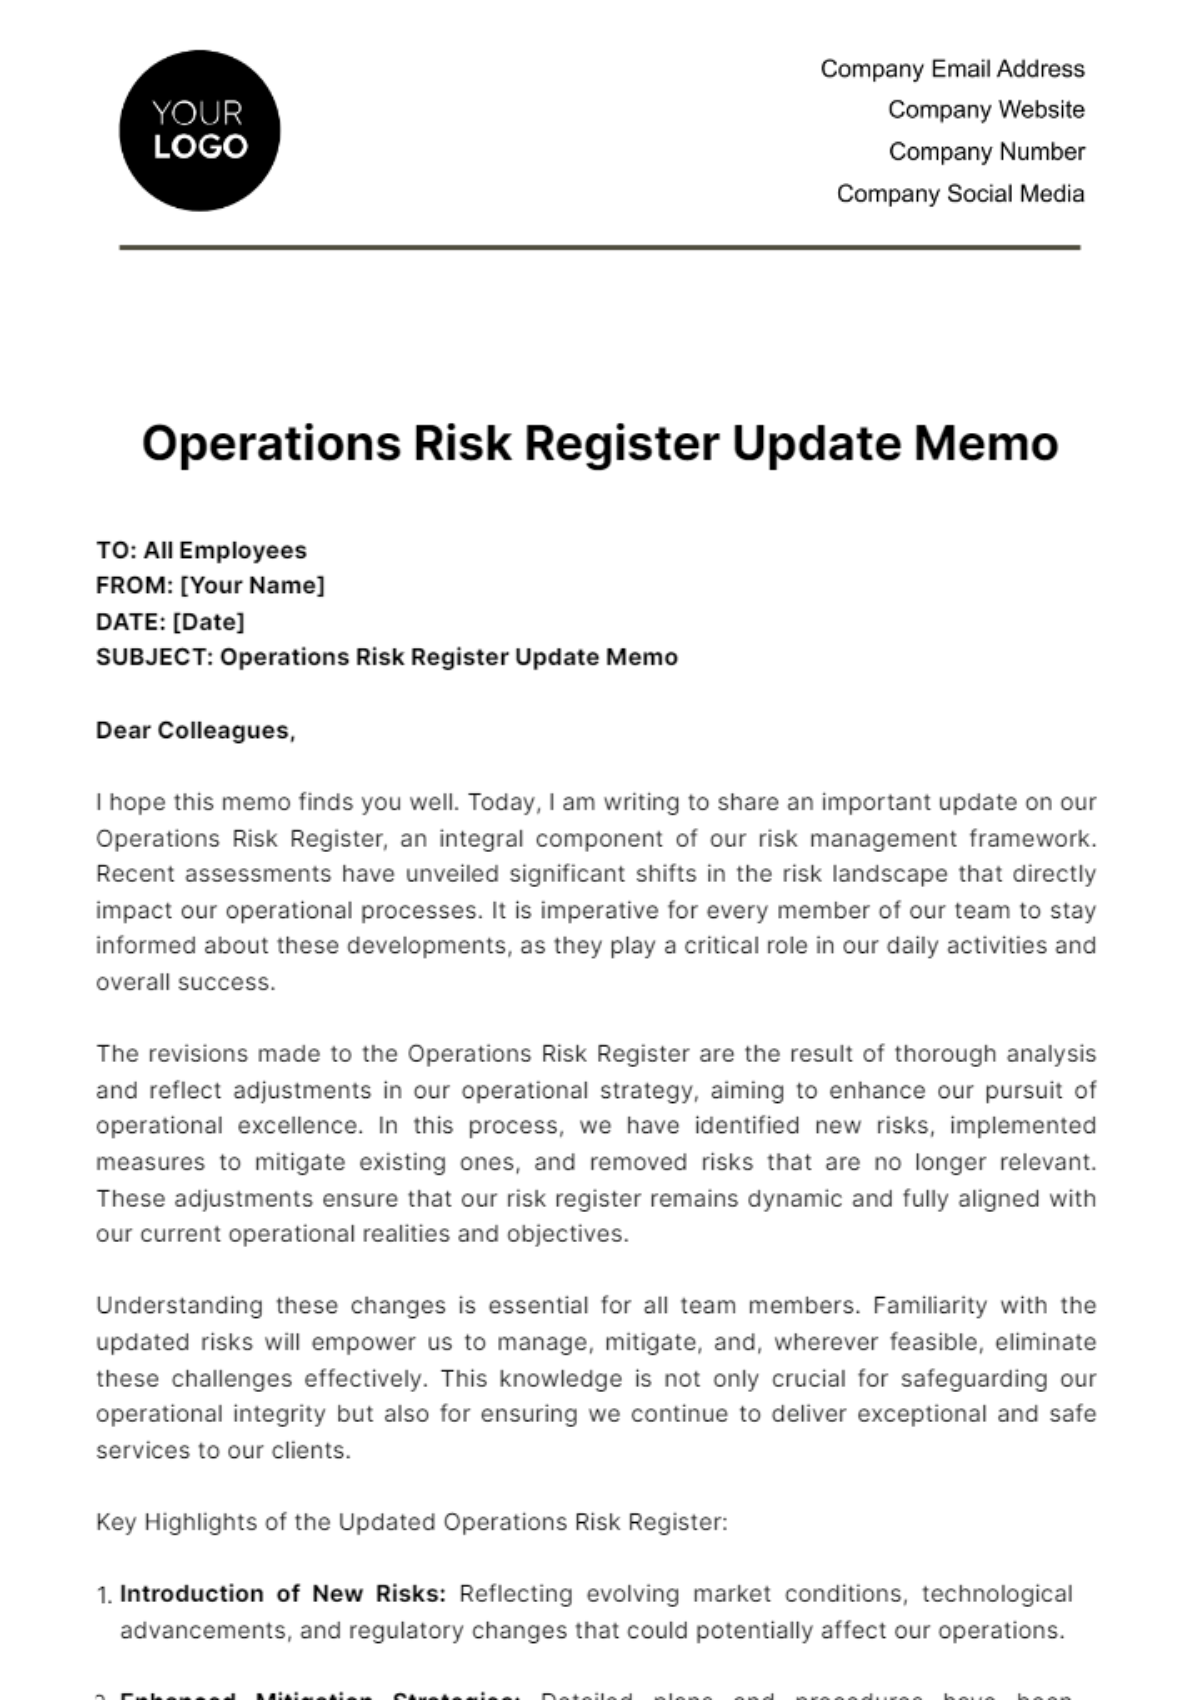 Operations Risk Register Update Memo Template